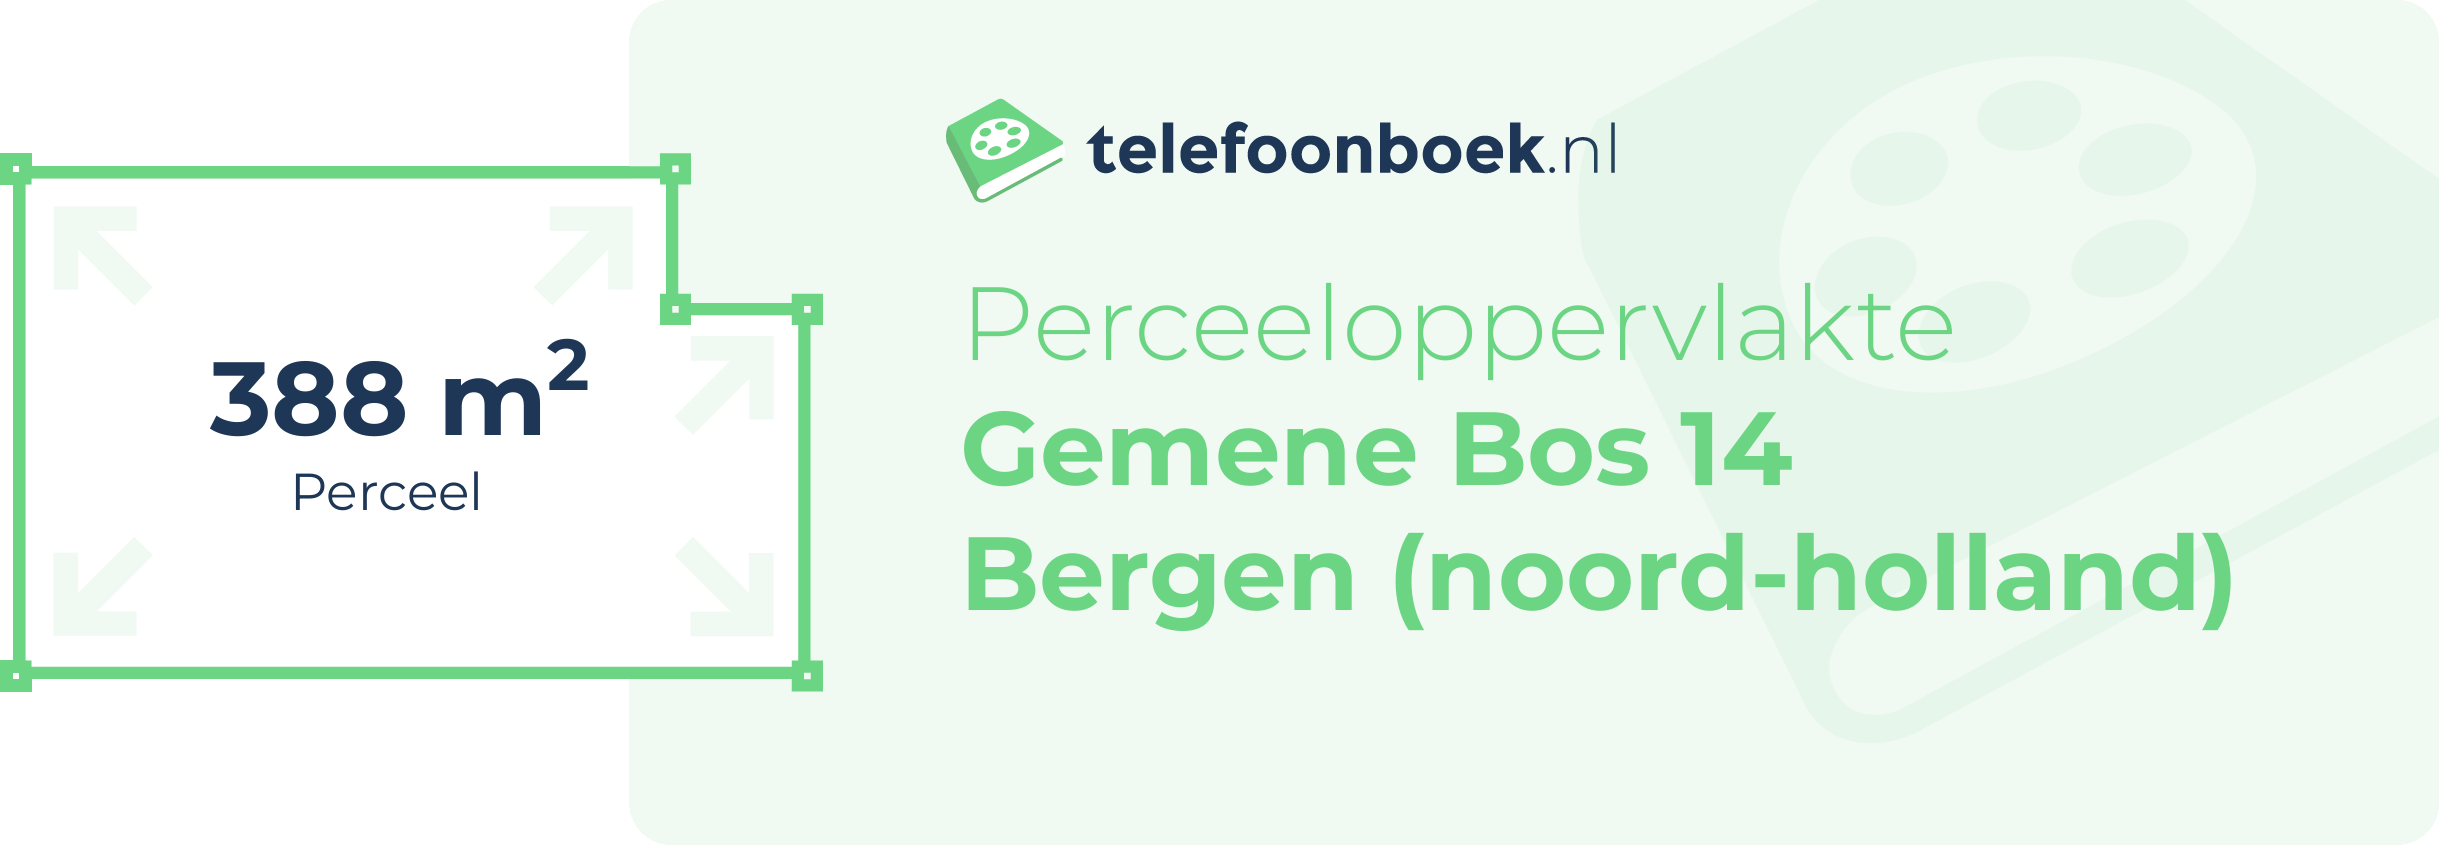 Perceeloppervlakte Gemene Bos 14 Bergen (Noord-Holland)